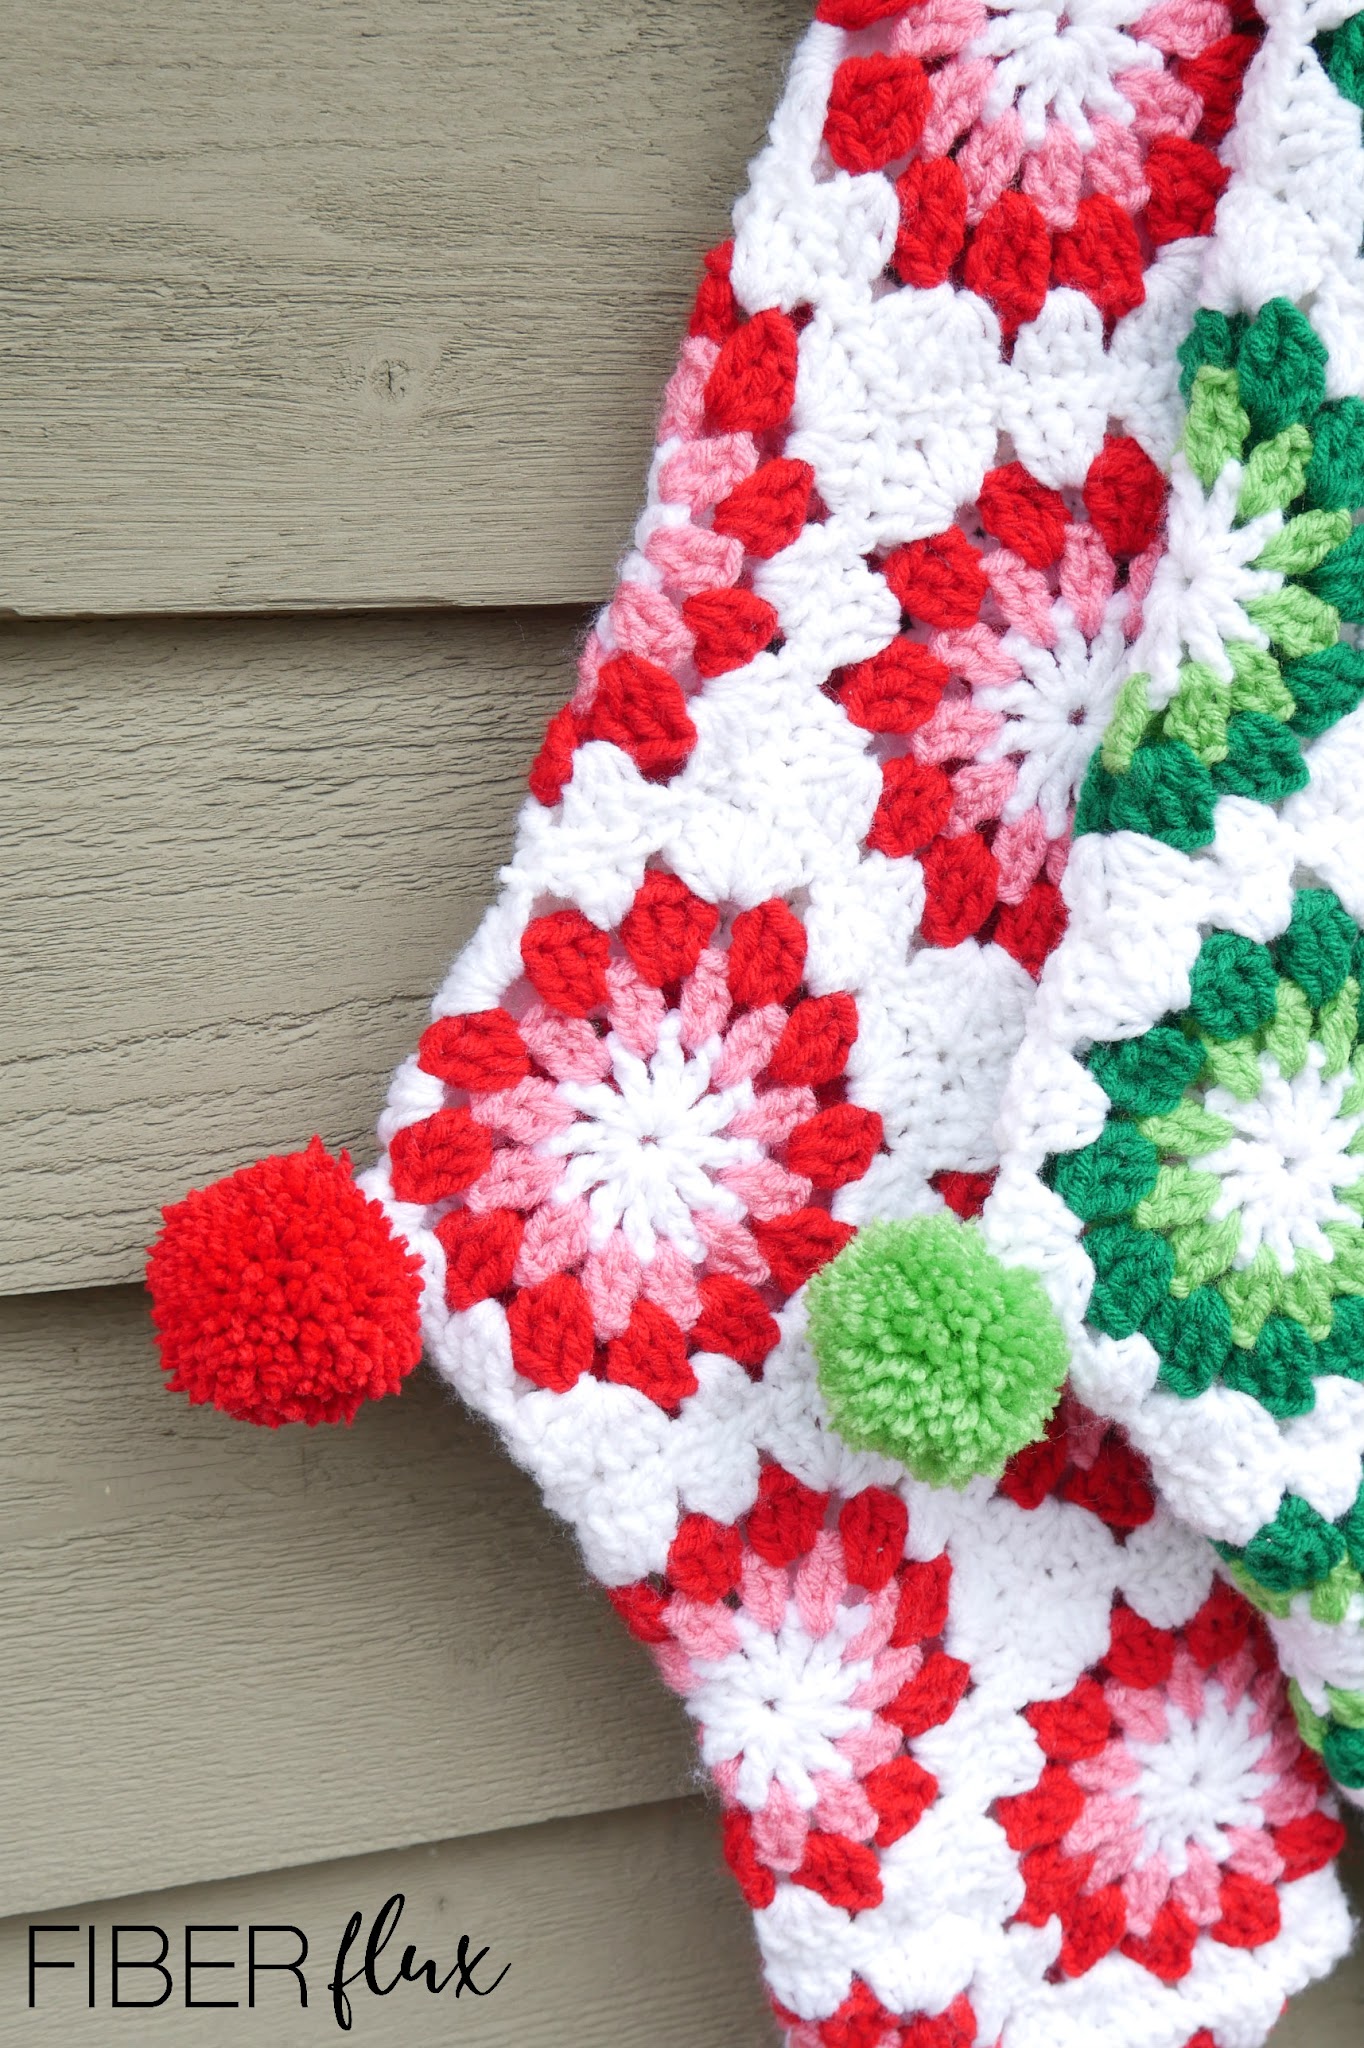 Wintermint Crochet Hexagon Stocking